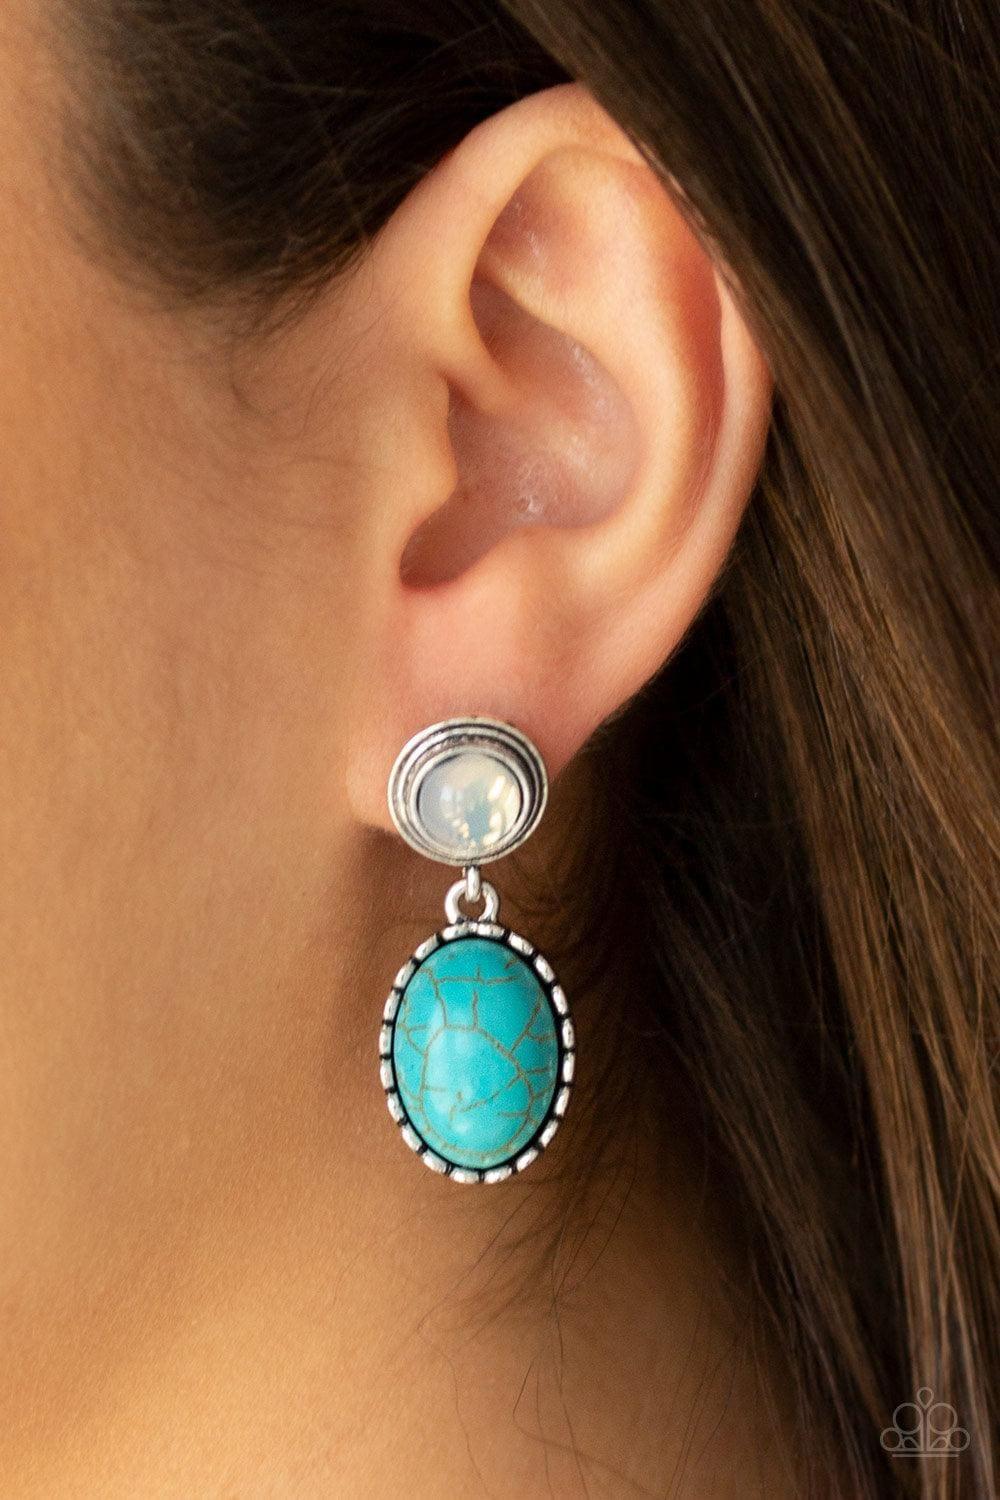 Paparazzi Accessories - Western Oasis - Blue Turquoise Earrings - Bling by JessieK